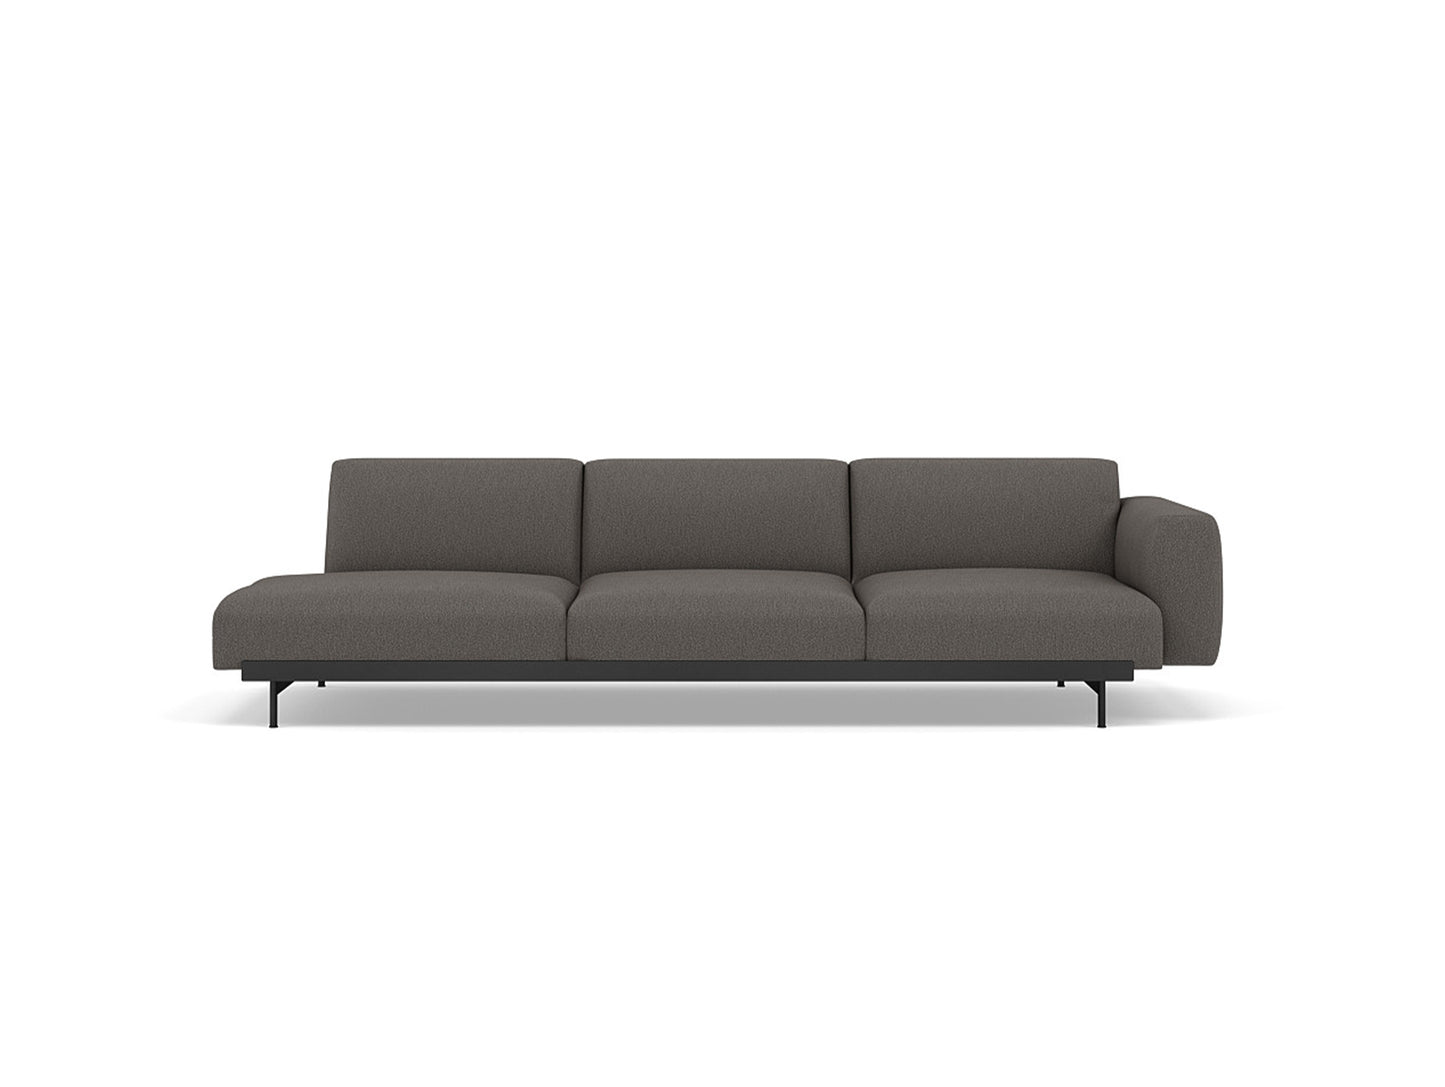 In Situ 3-Seater Modular Sofa by Muuto - Configuration 2 / Clay  9